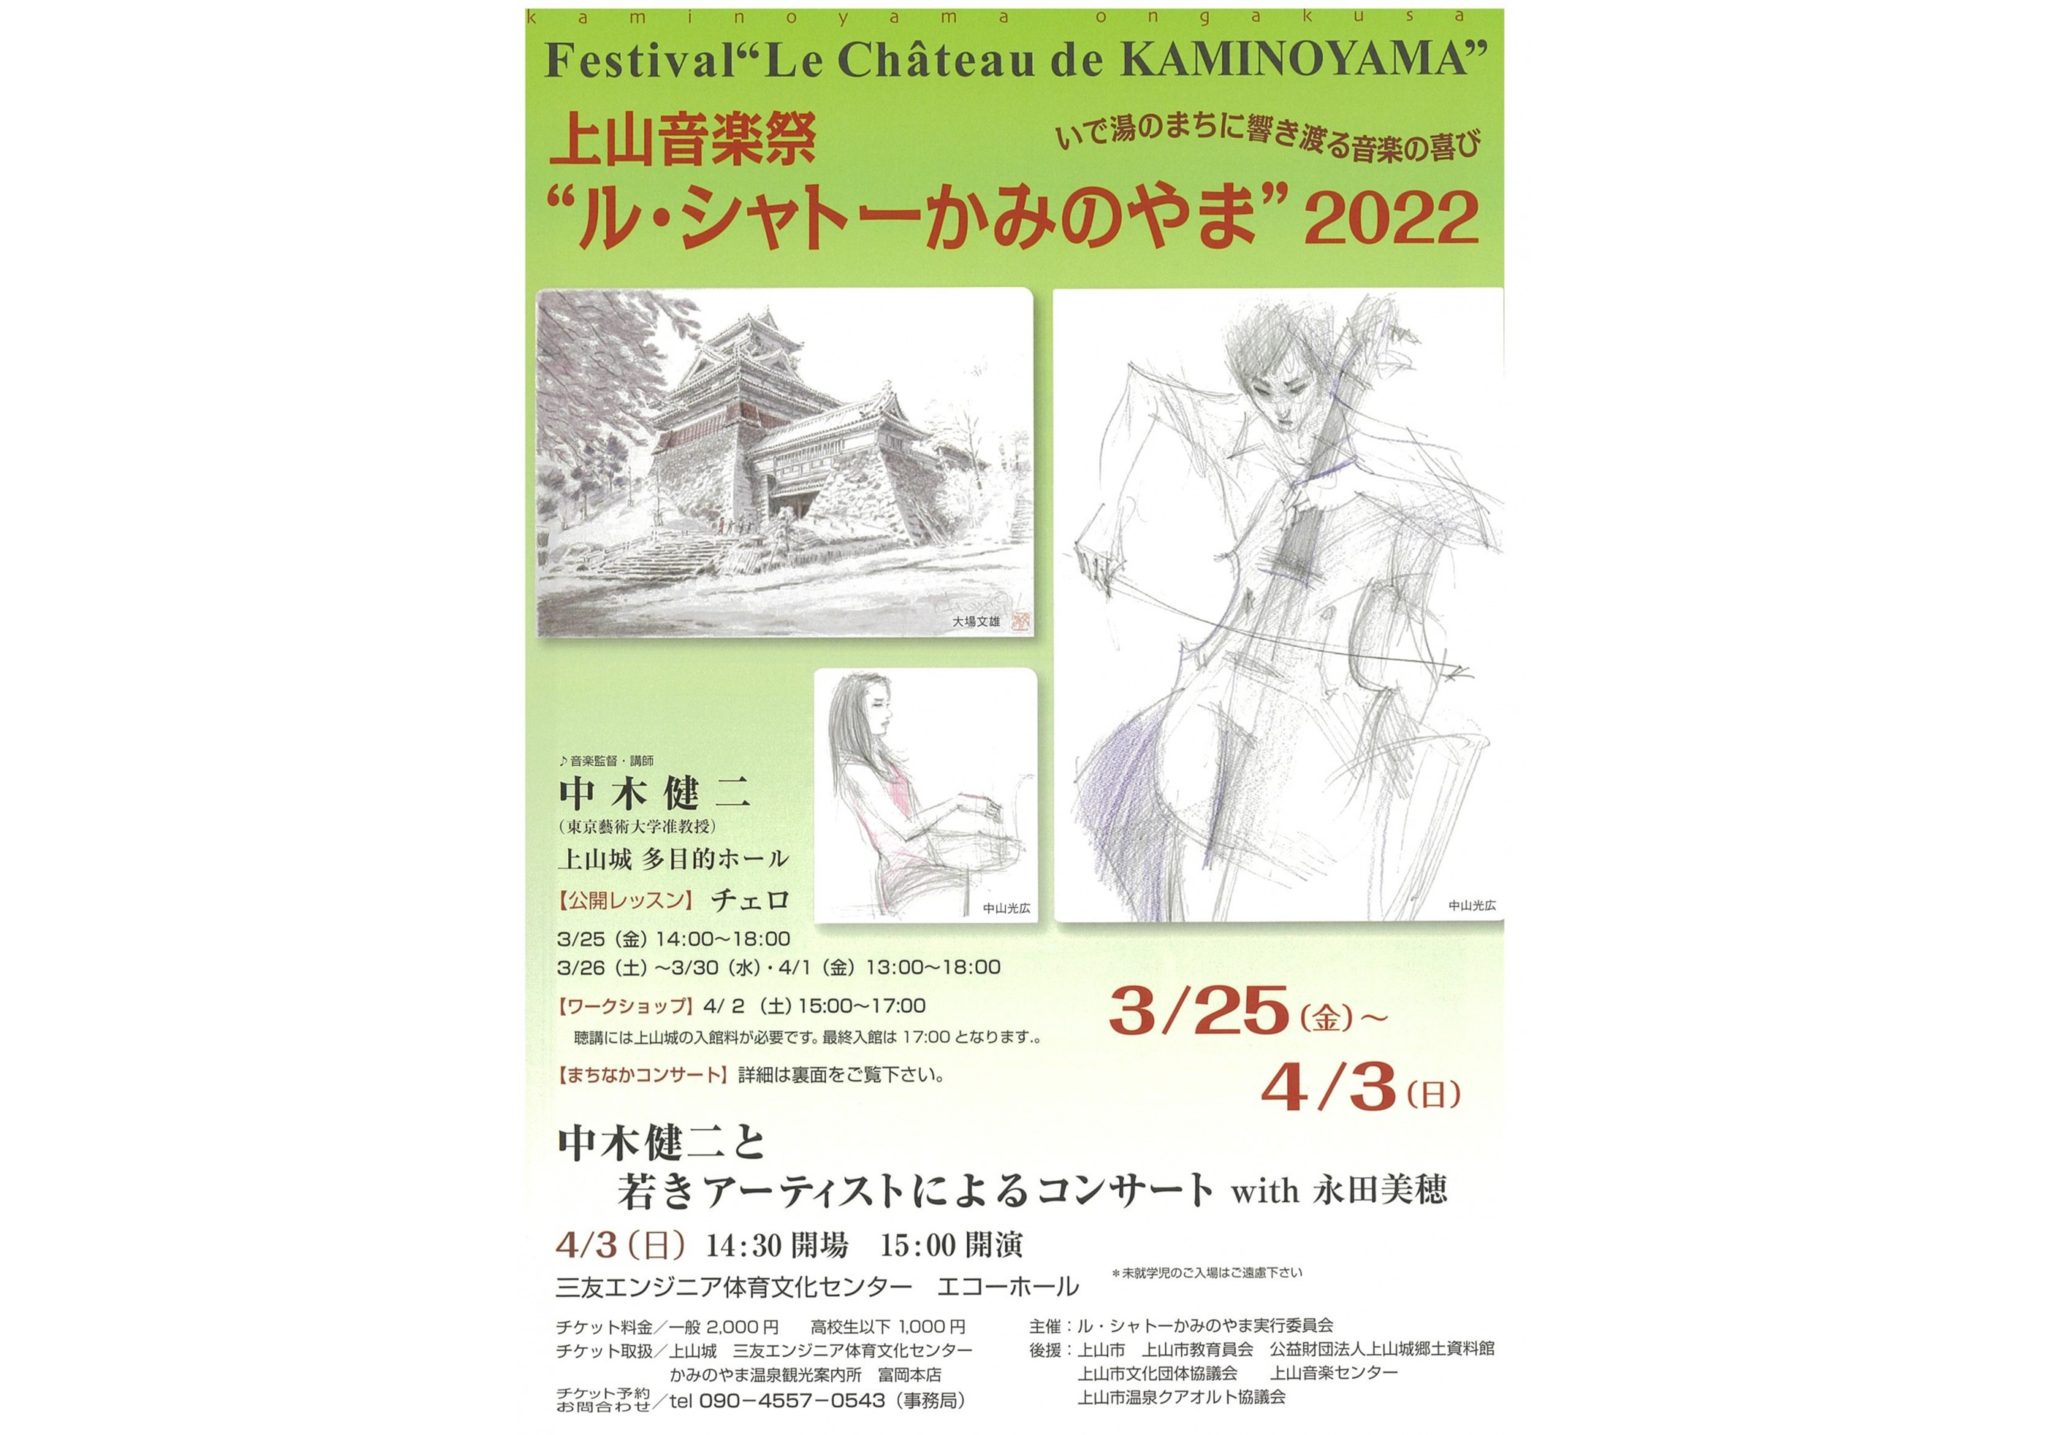 Le Chateau Kaminoyama Music Festival